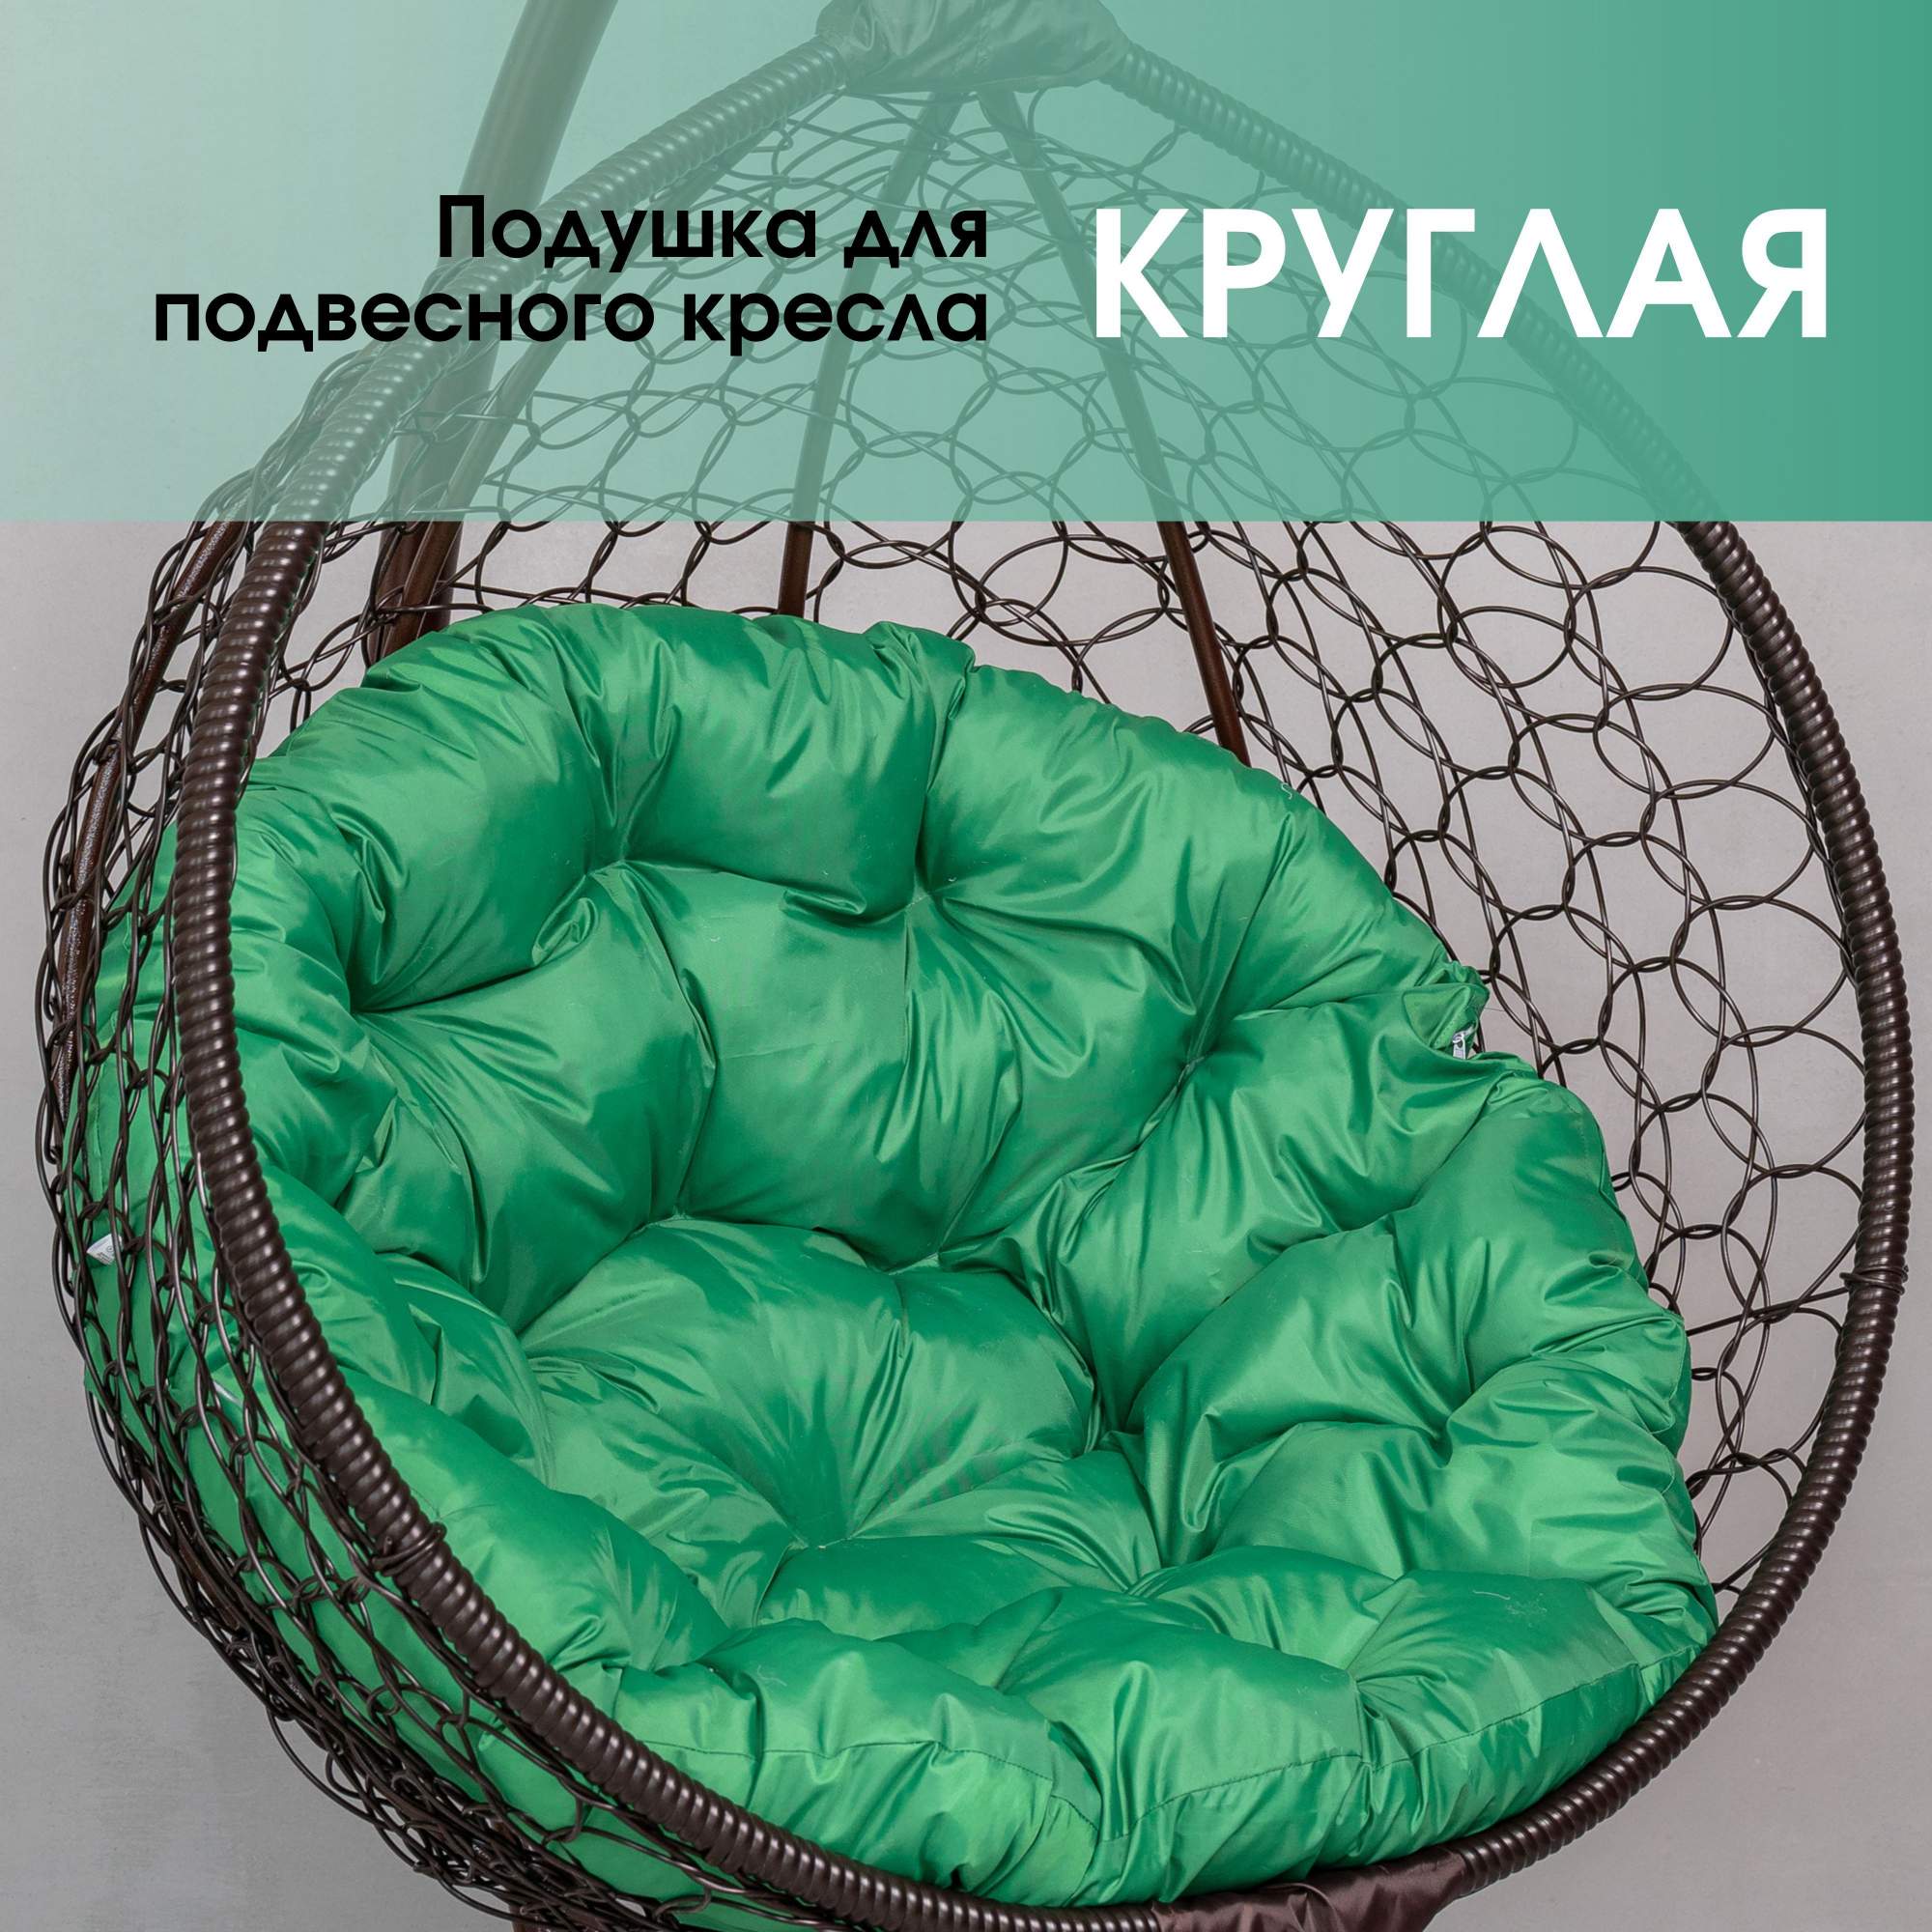 Подушка для садовой мебели STULER Круг 100x100x10 зеленая круглая 3-KI